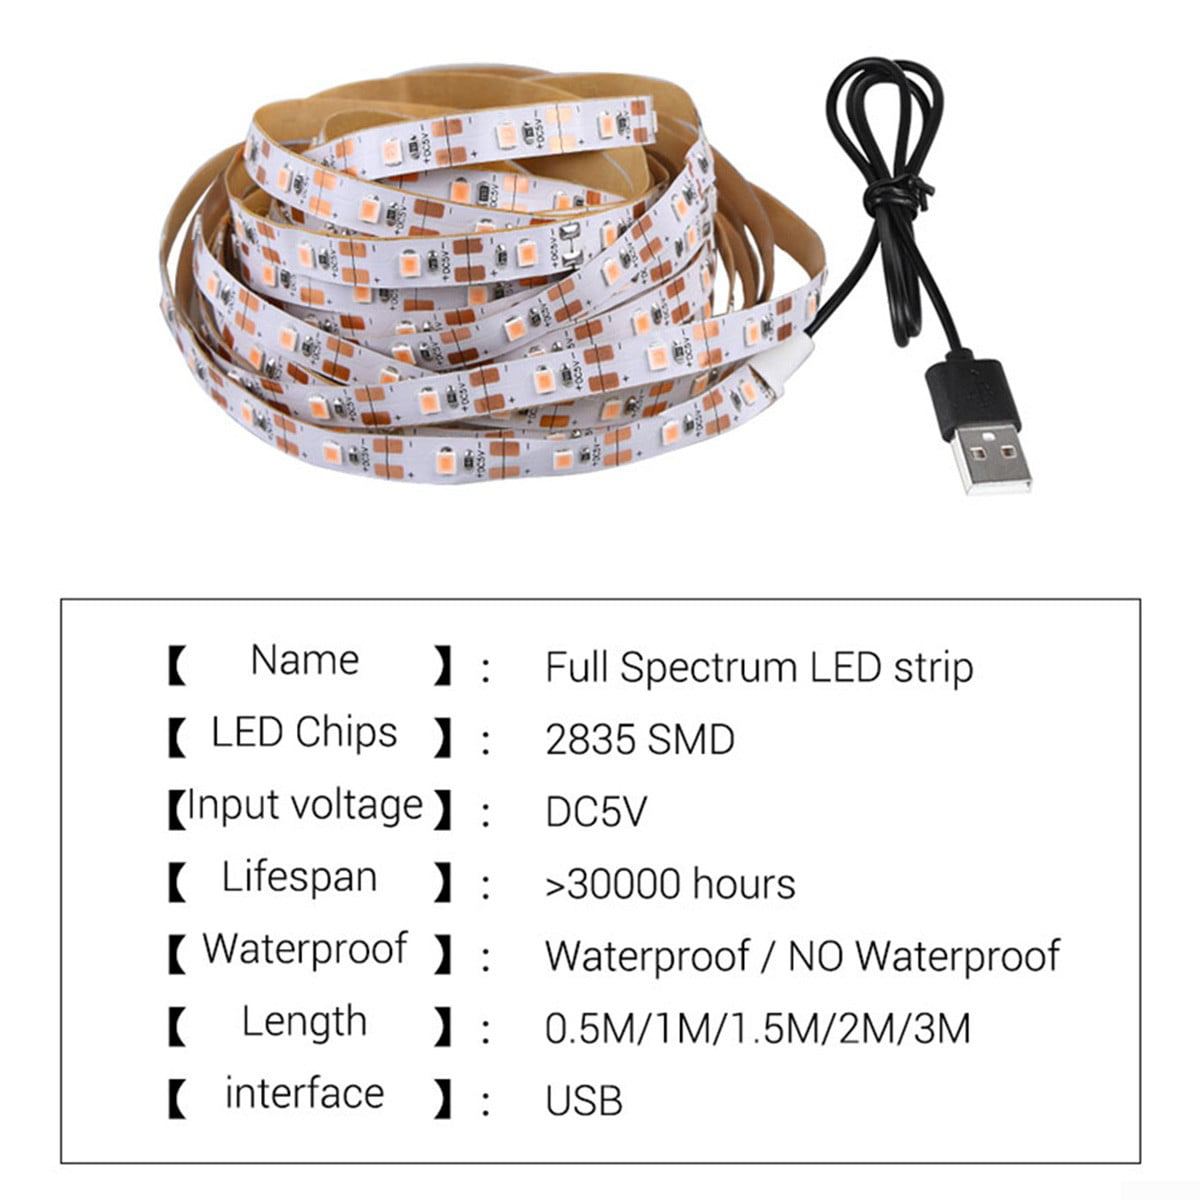 USB LED Grow Light Strip Full Spectrum 2835 LED Strip for Indoor Plant Growing